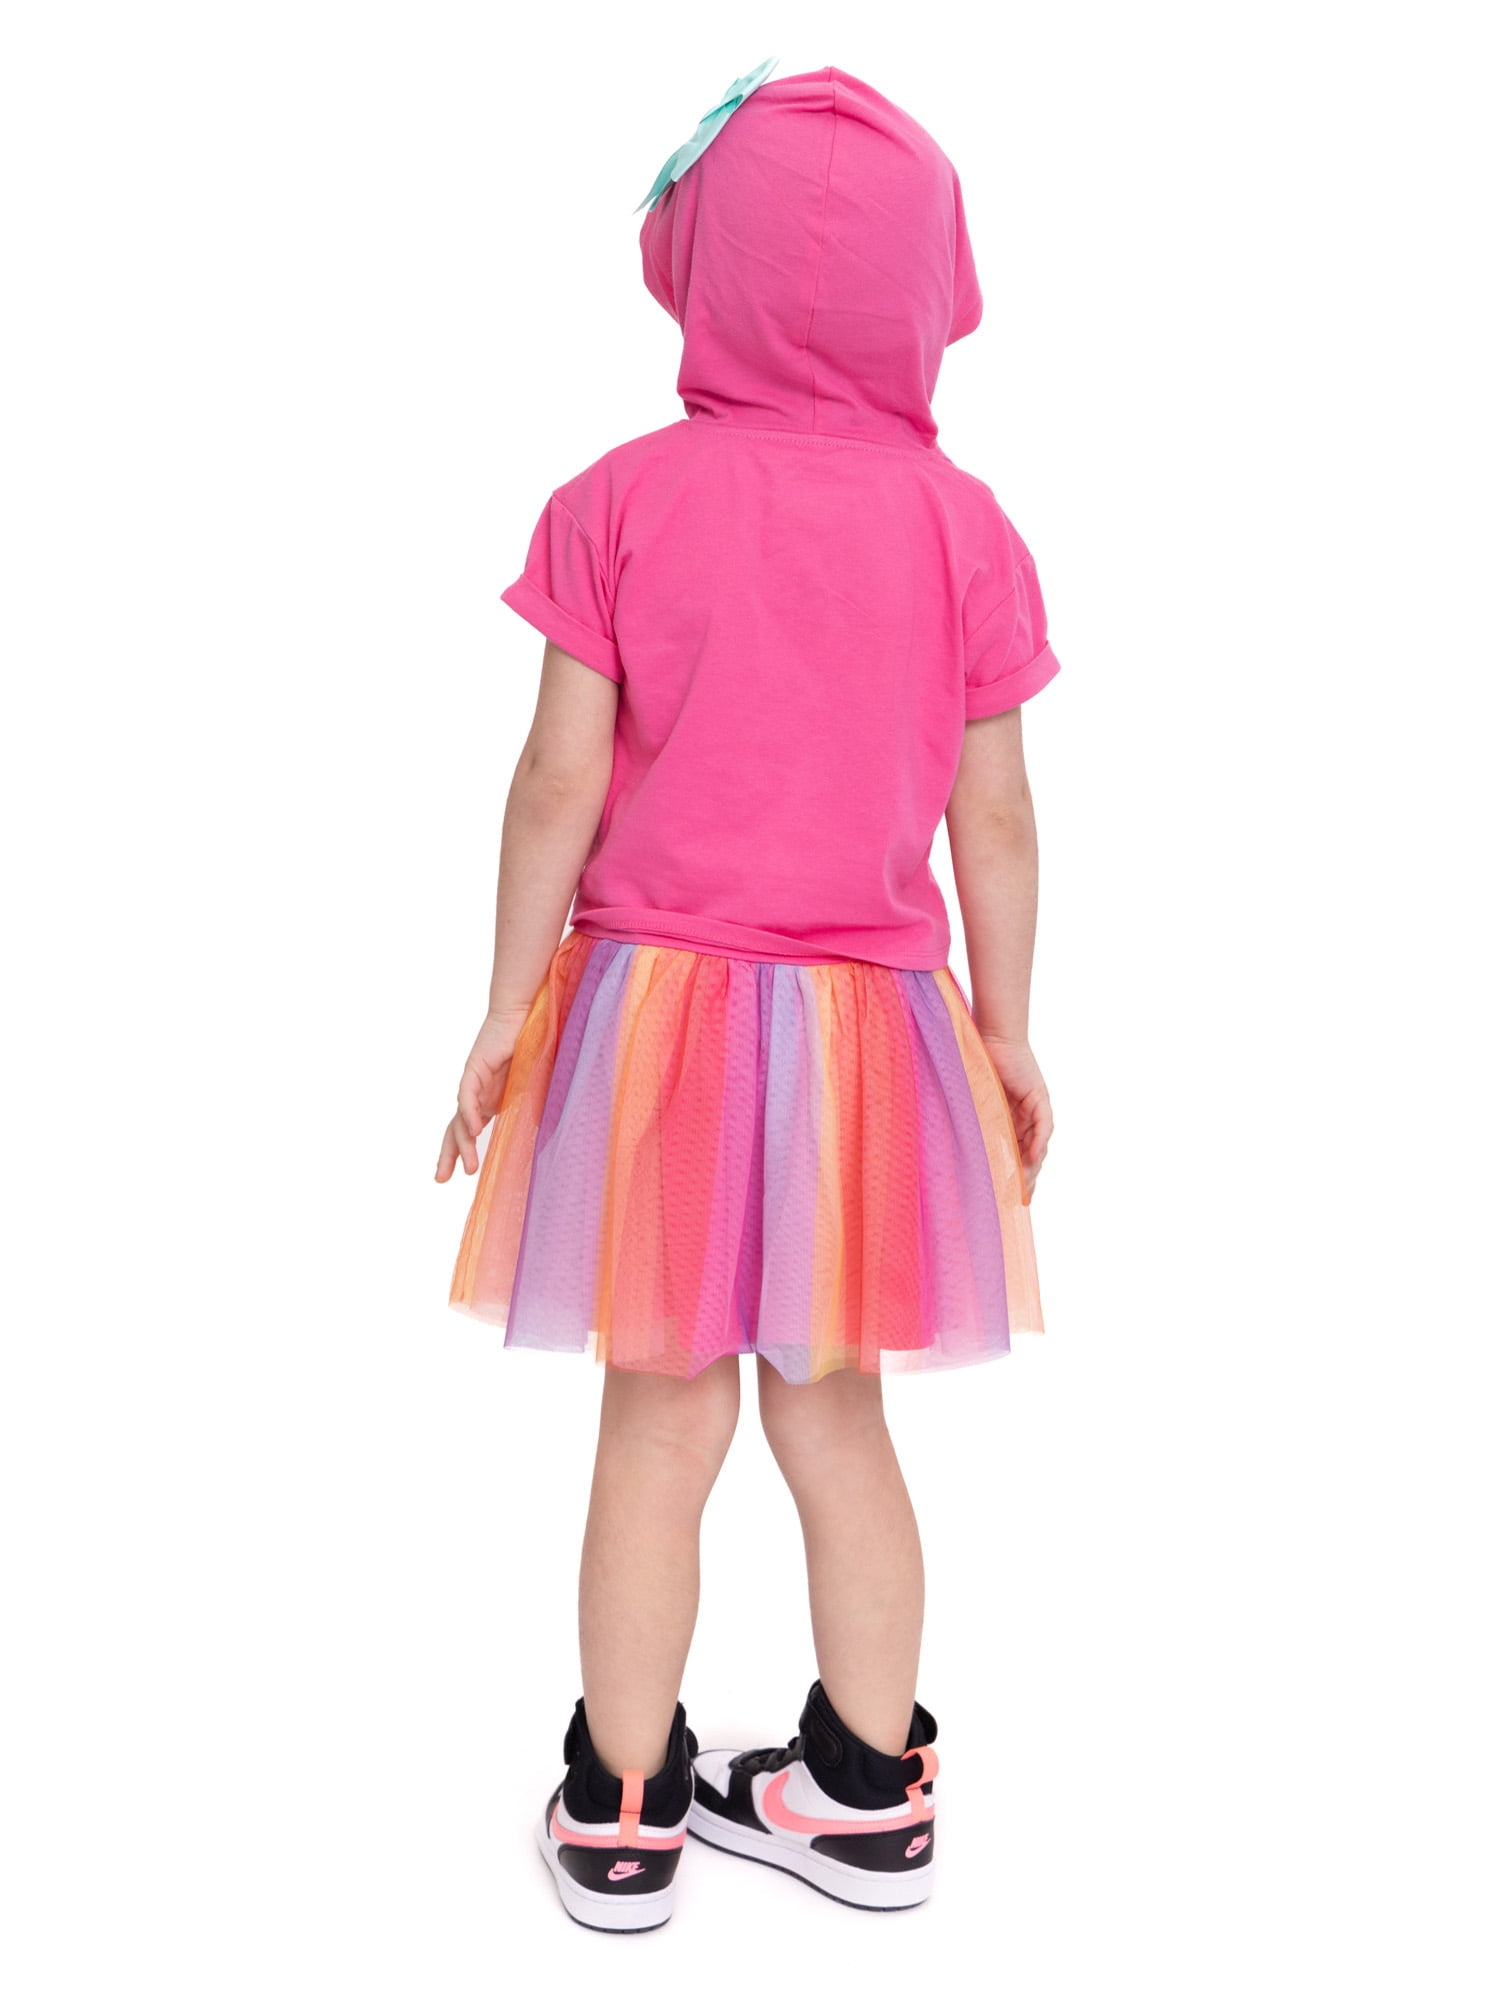 Jojo Siwa Girls Hooded Cosplay Dress with Tulle Skirt, Sizes 4-16